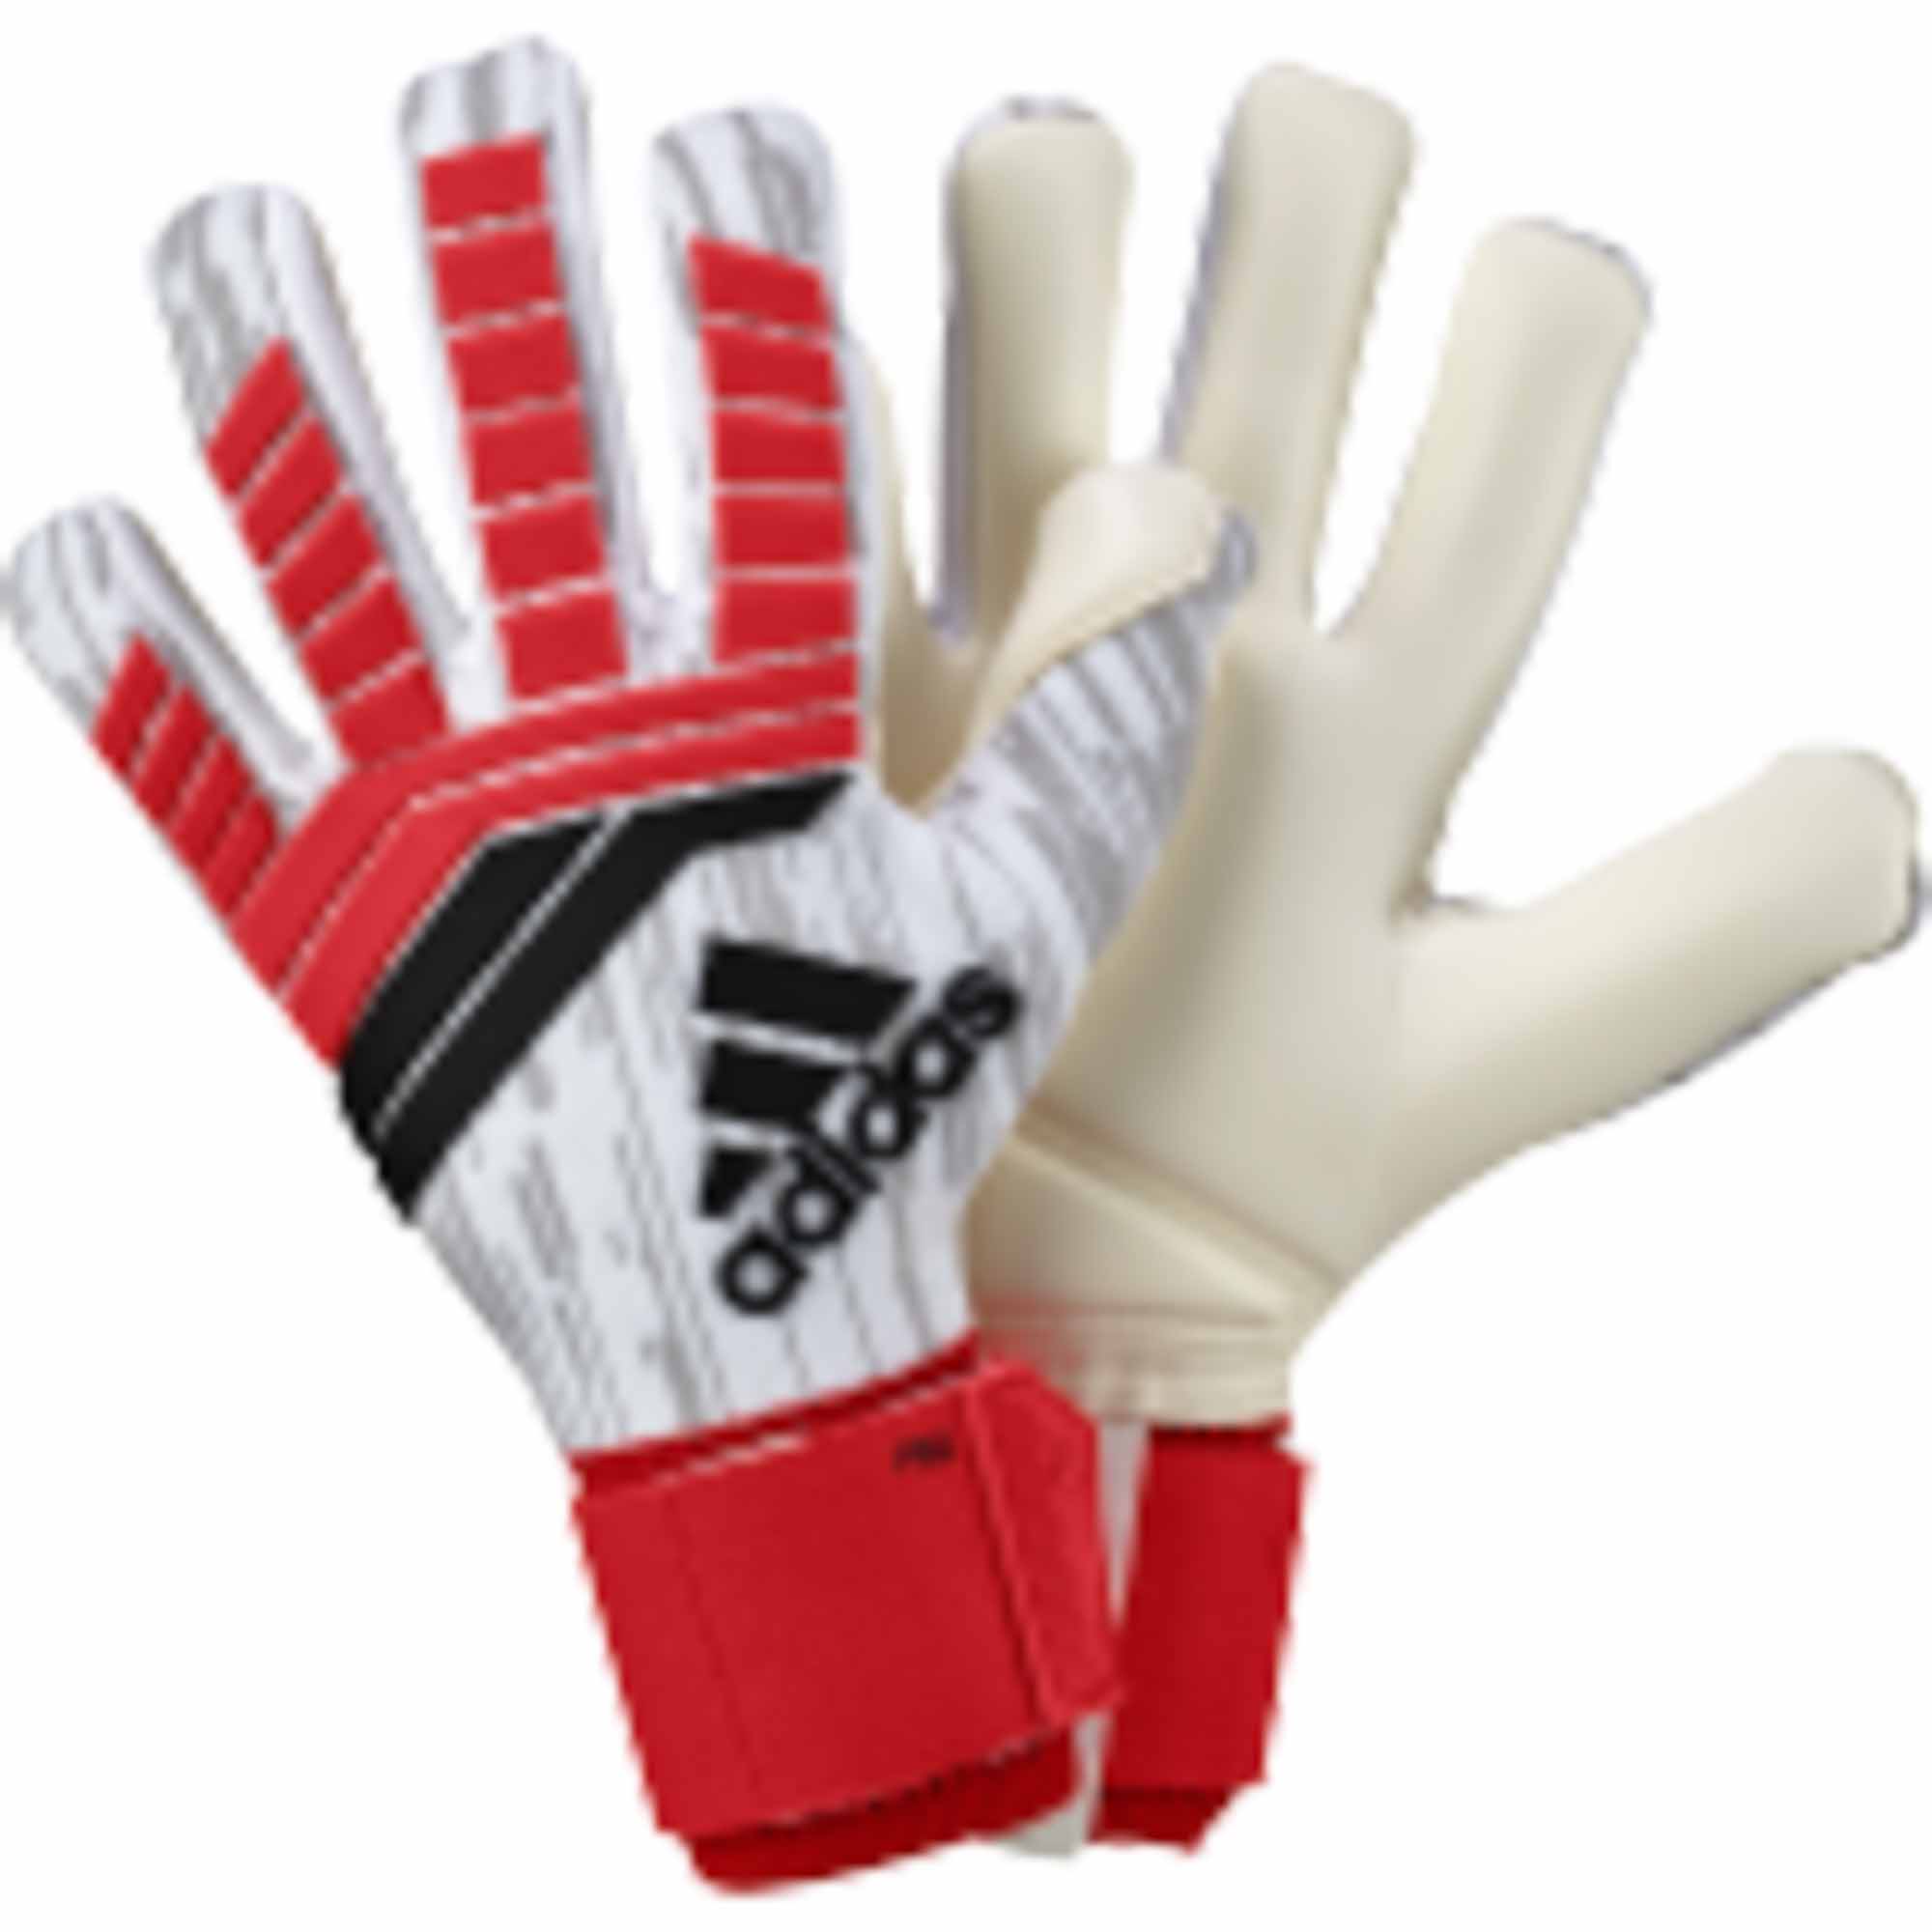 adidas professional goalkeeper gloves